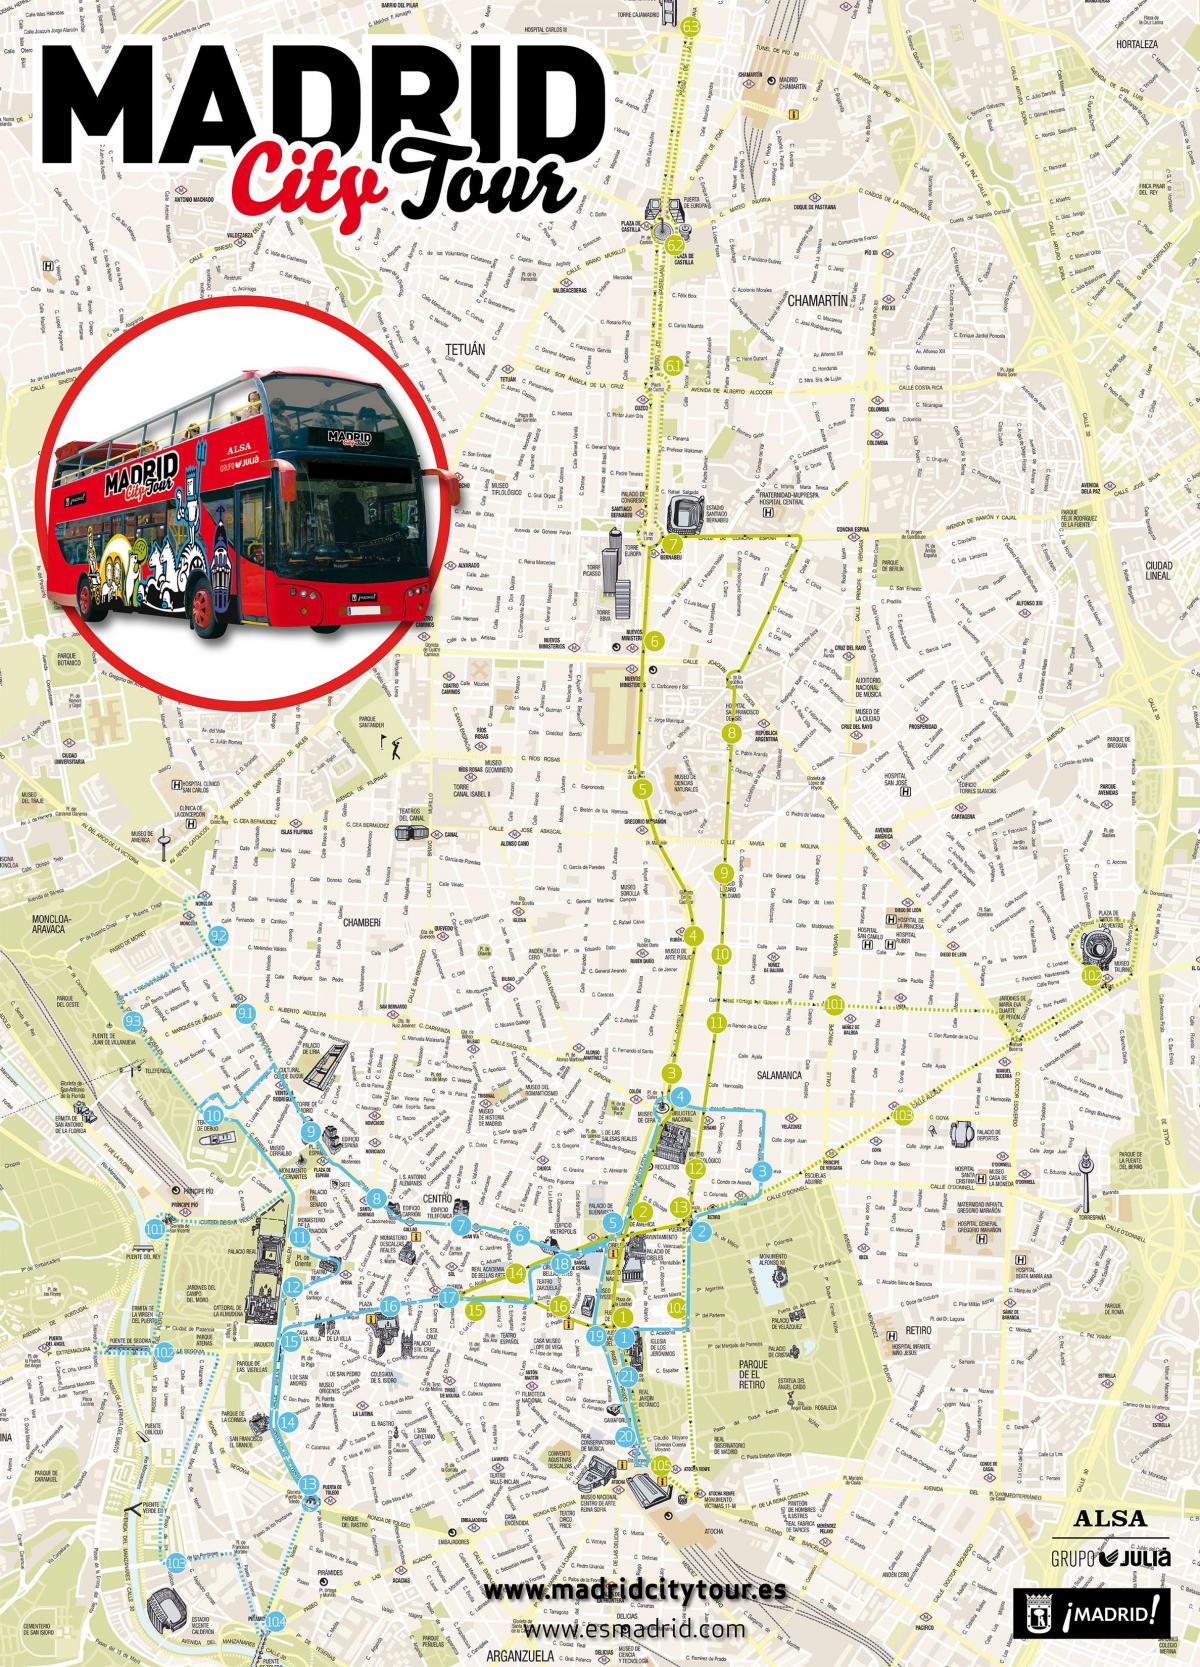 Madrid city bus tour kaart